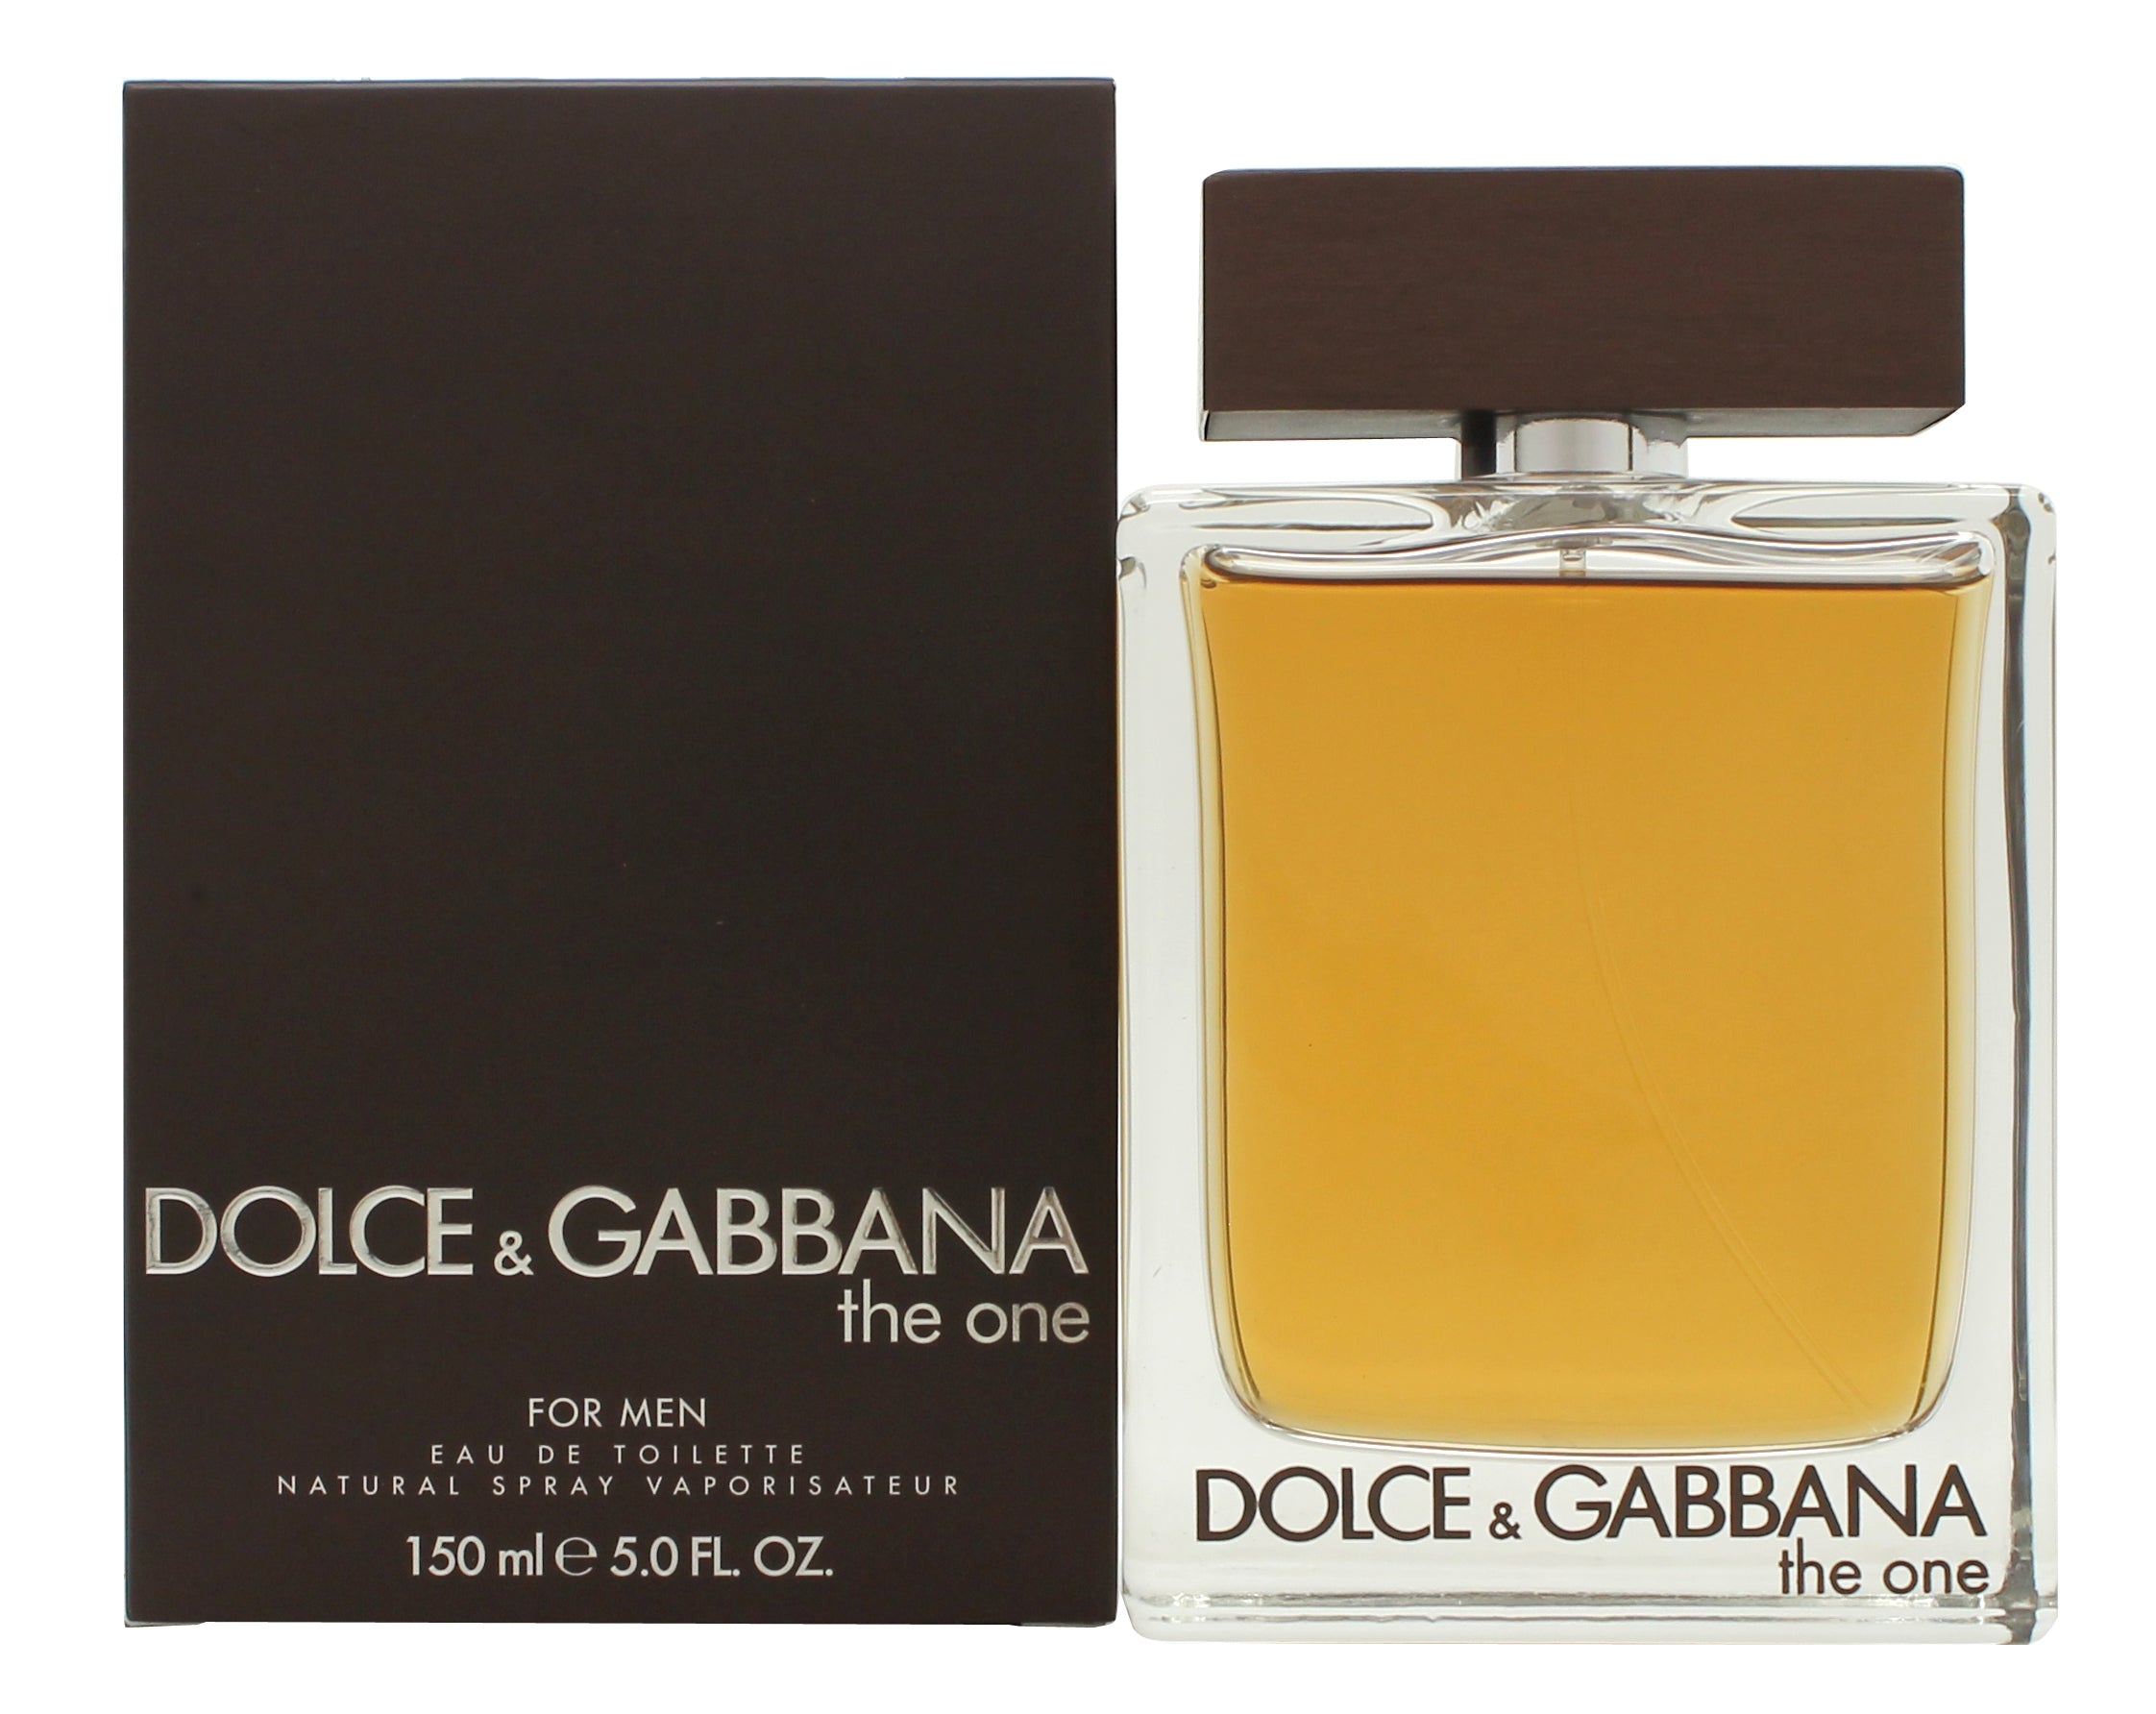 View Dolce Gabbana The One Eau de Toilette 150ml Spray information